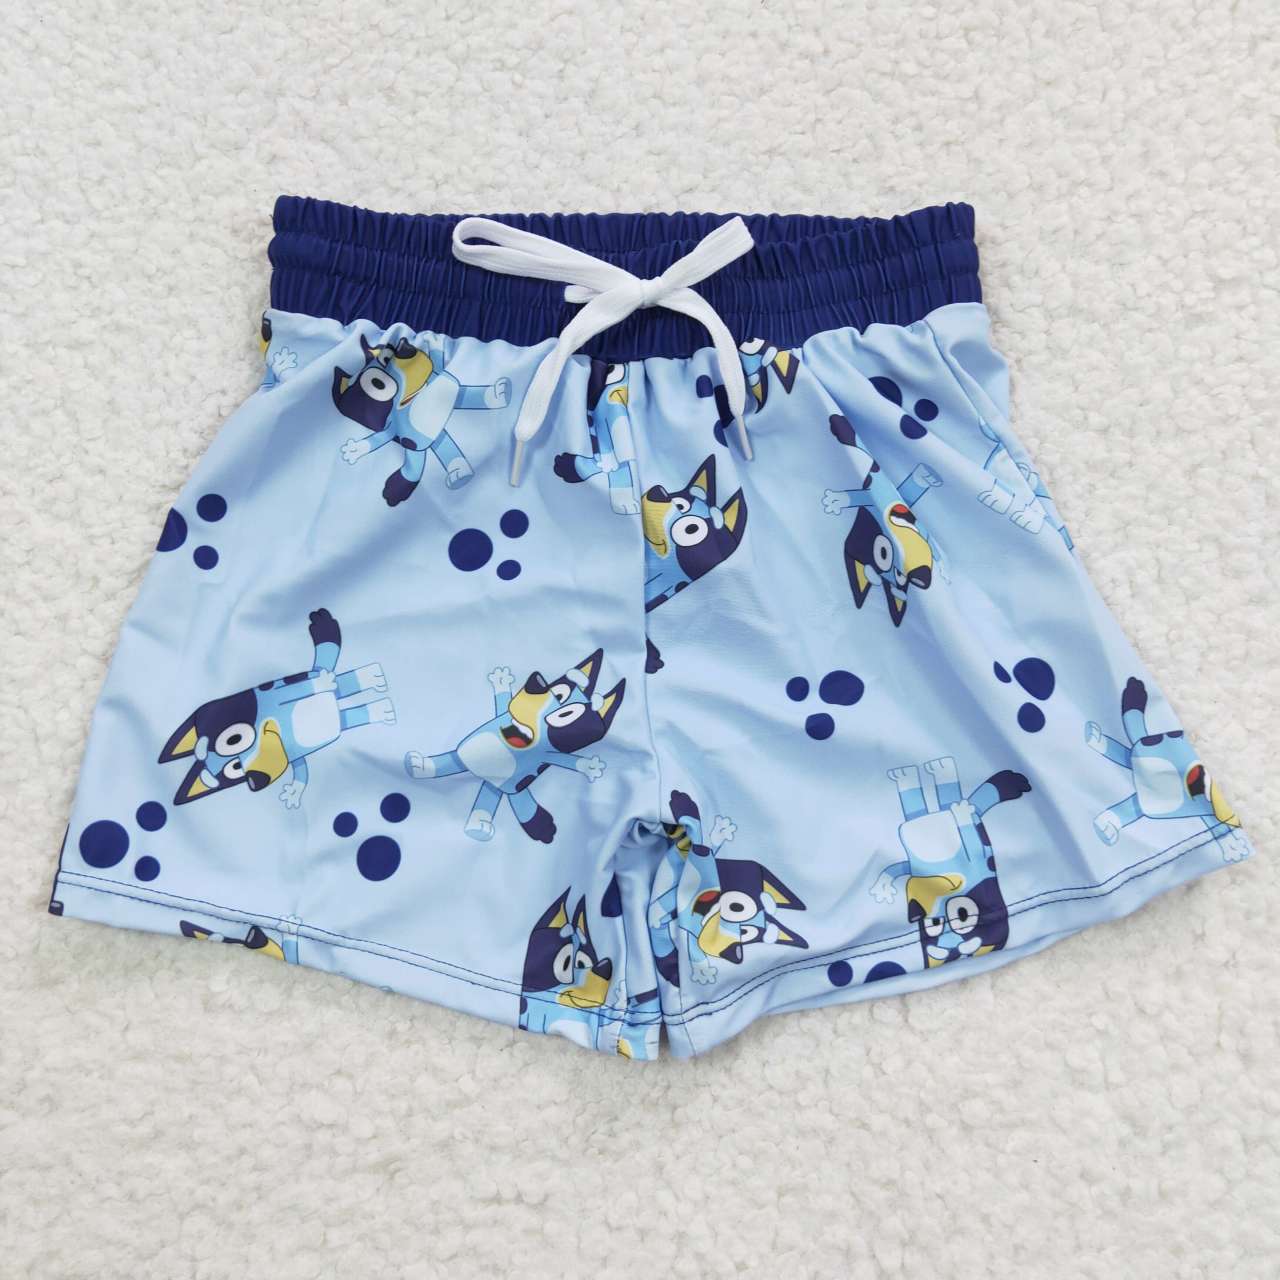 bluey boy swim trunk shorts